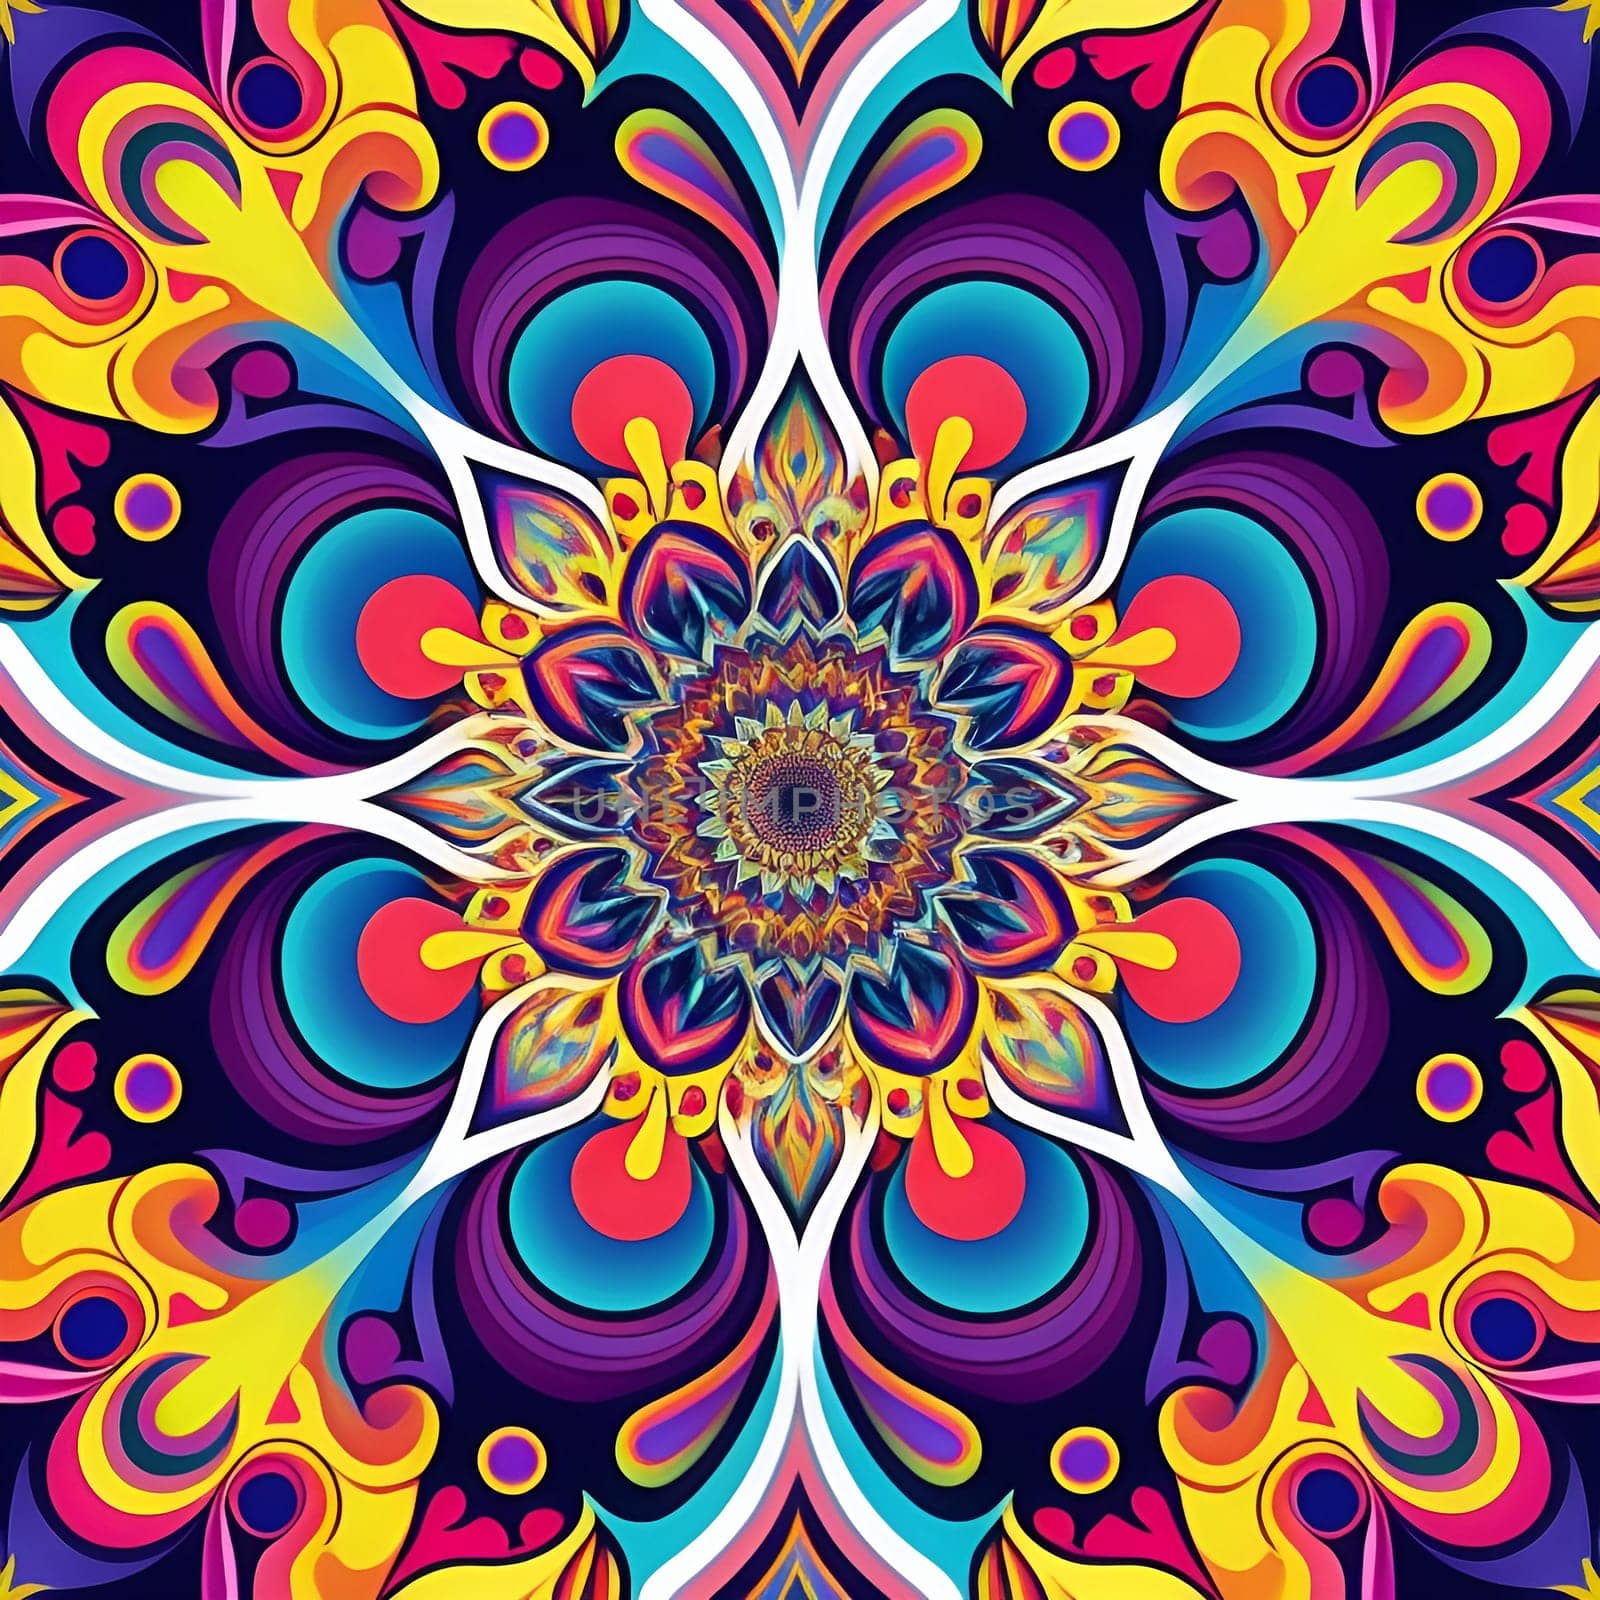 Vibrant Colorful Psychedelic Mandala Art by gallofoto